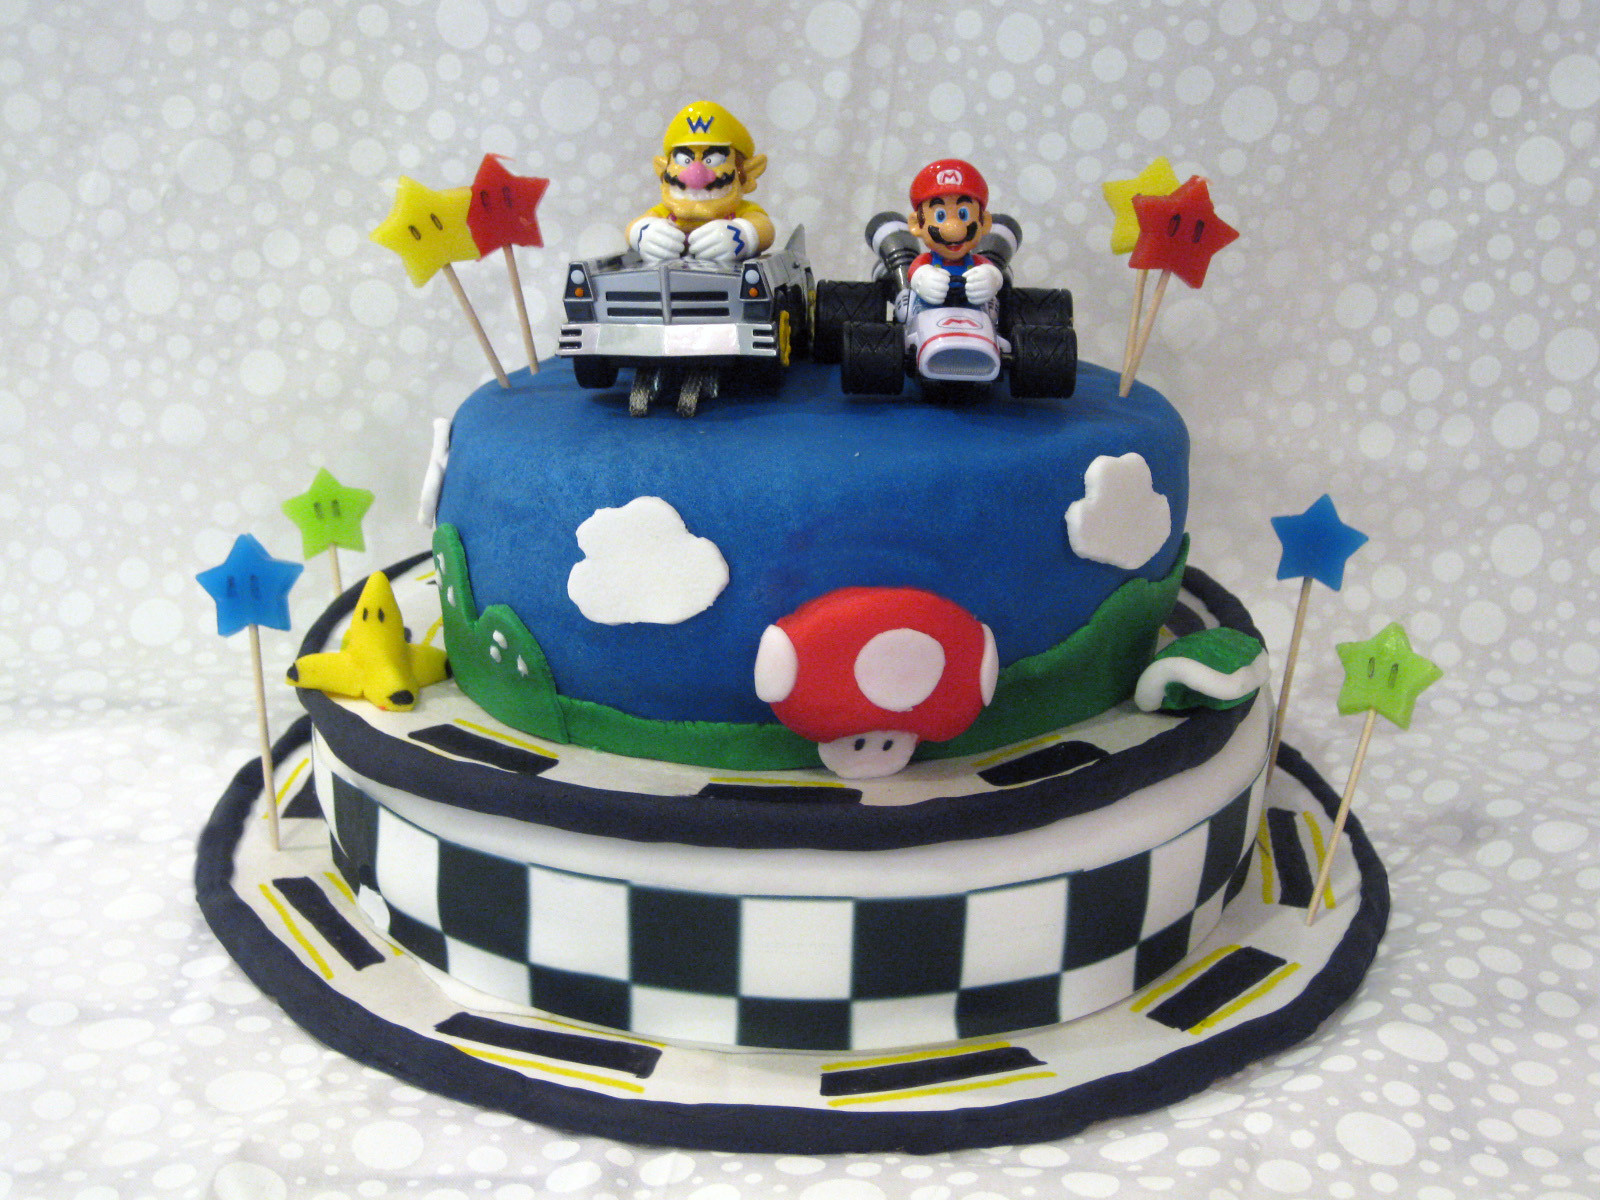 Mario Kart Birthday Cake
 The Best Way To Celebrate The Release of Mario Kart 8